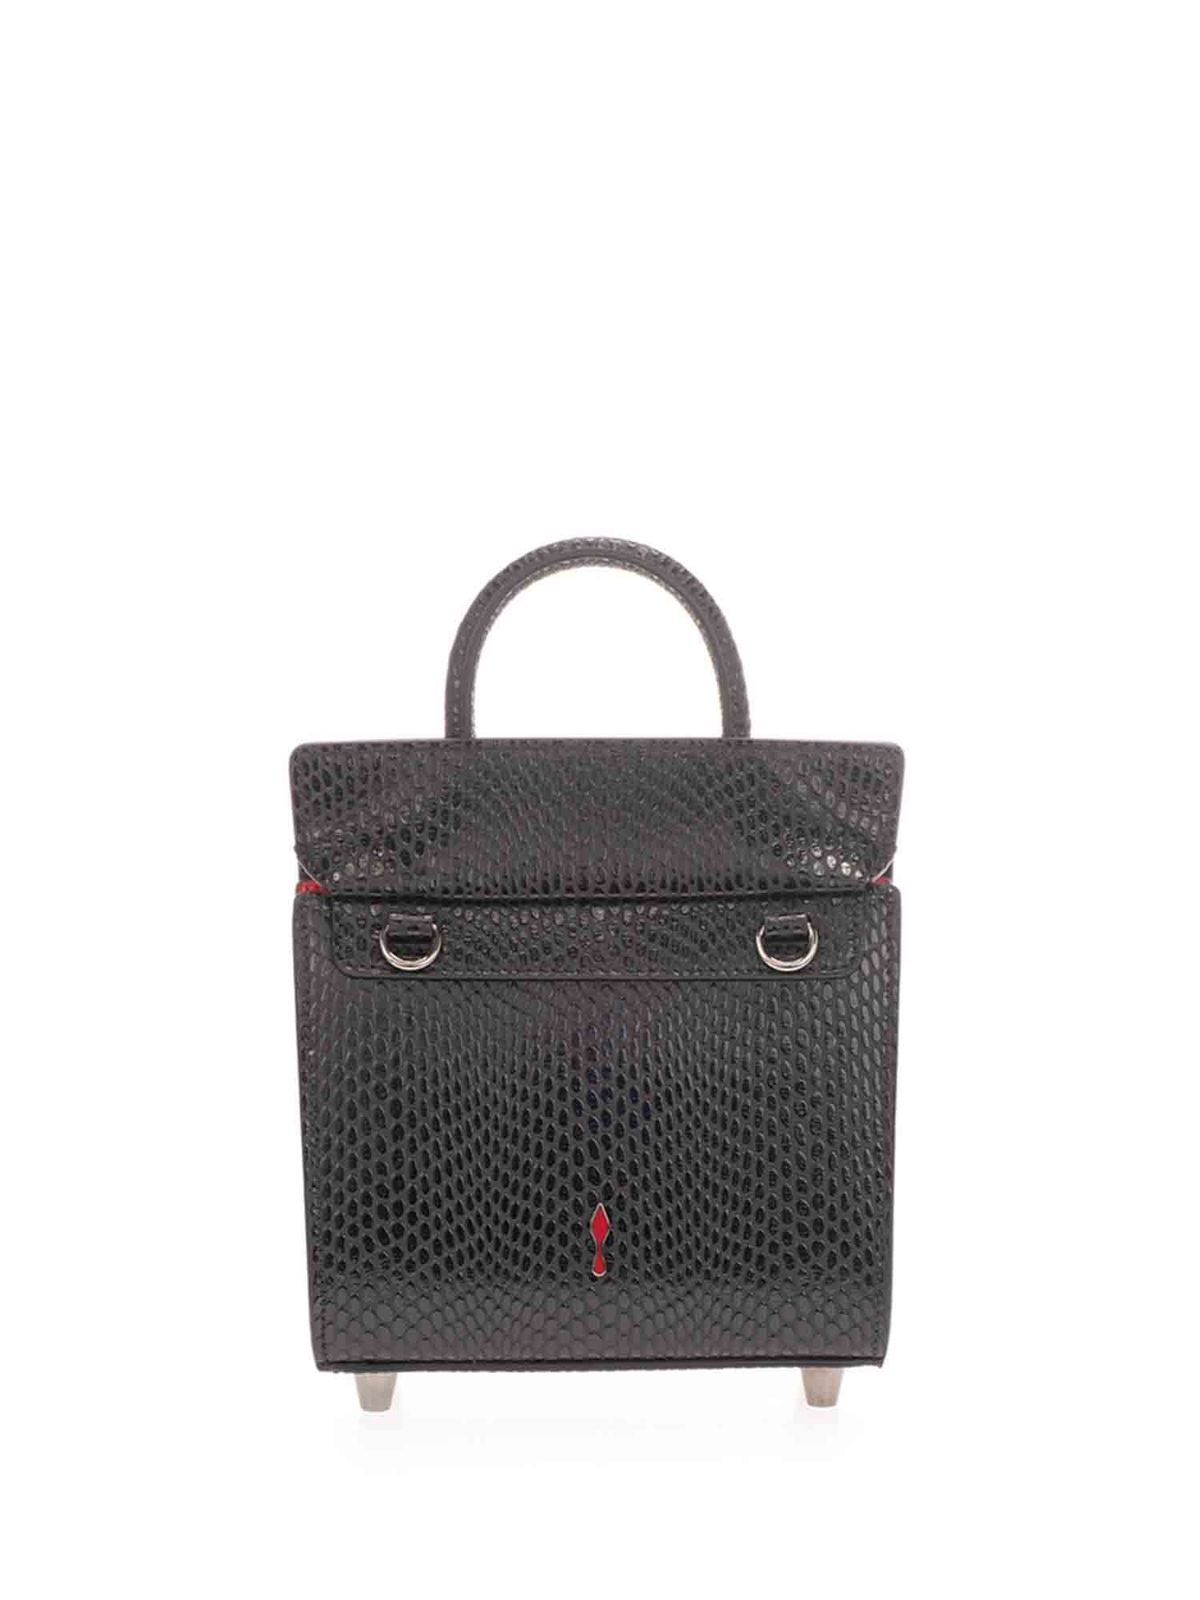 Totes bags Christian Louboutin - Paloma Top Handle Mini bag in black -  1215048CM53